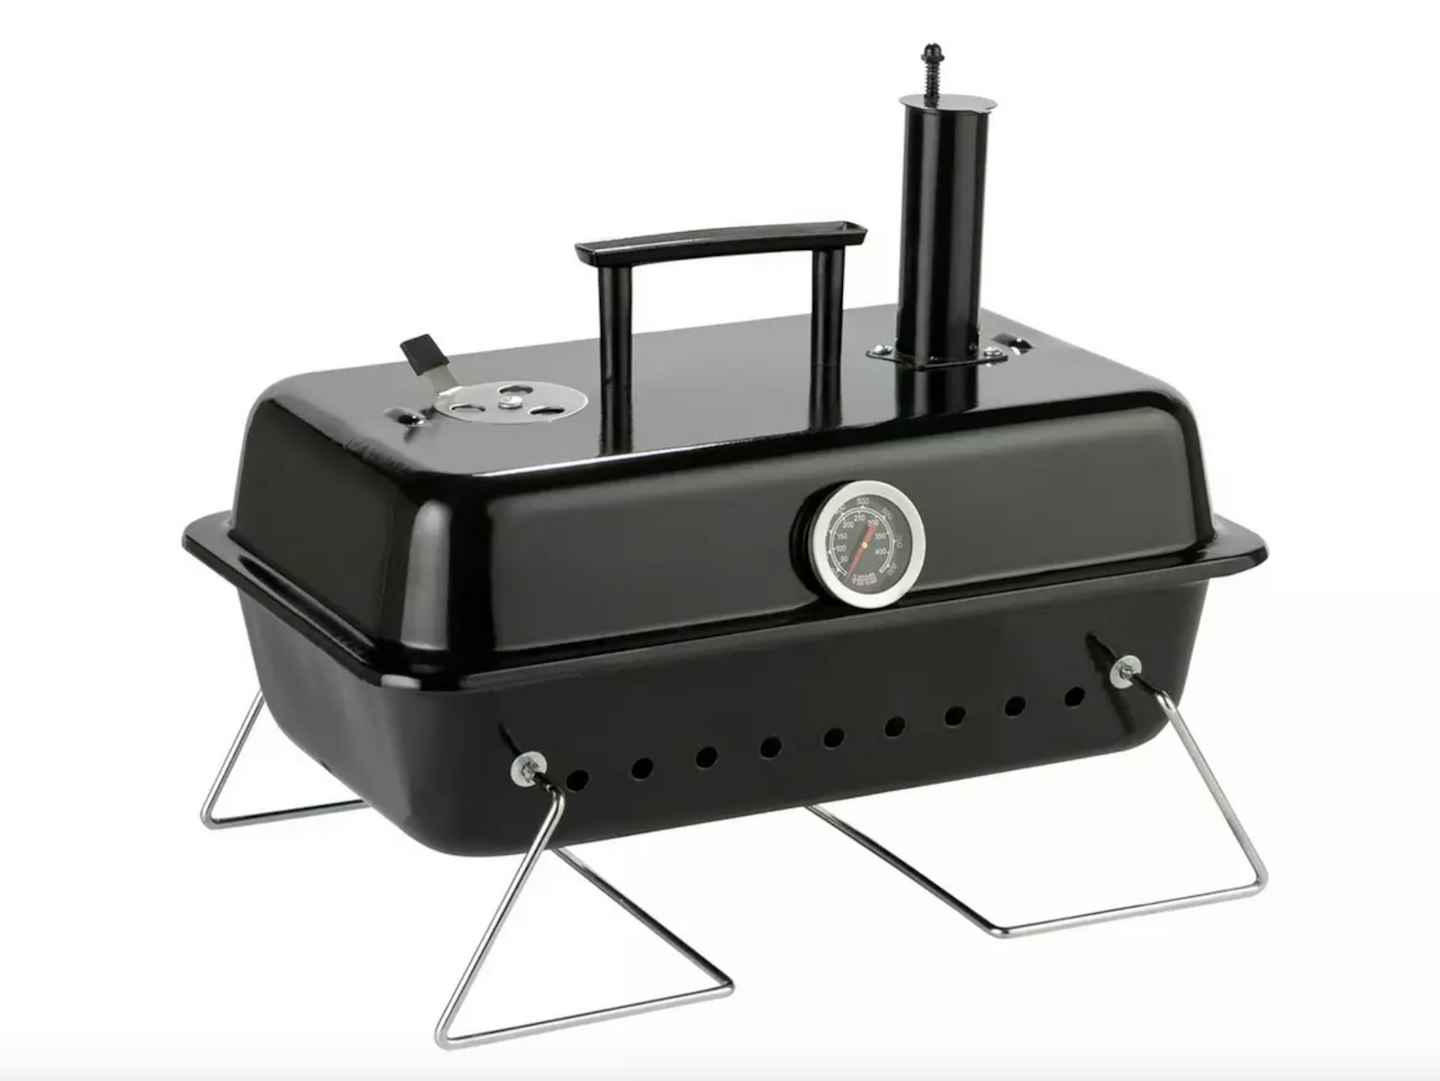 Argos Home Table Top Charcoal Smoker BBQ-Black